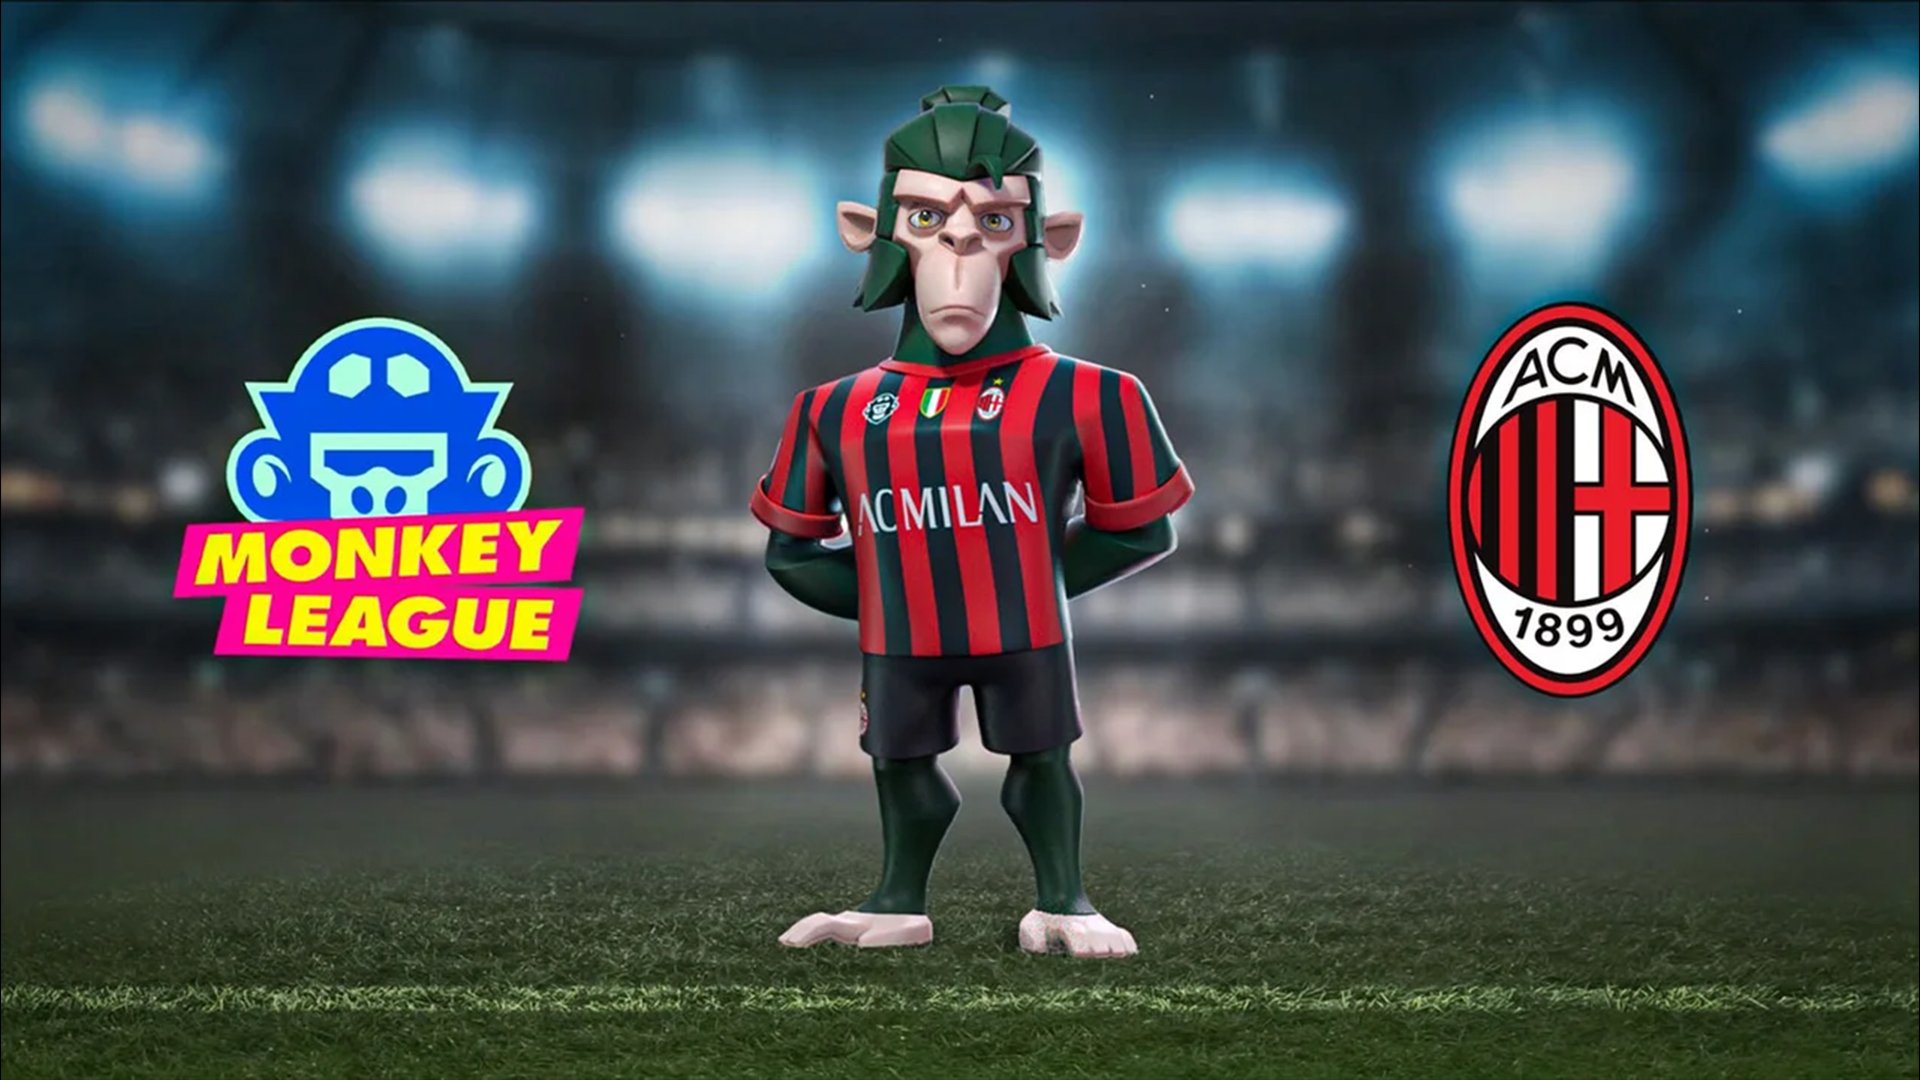 AC Milan Monkey League Partnership